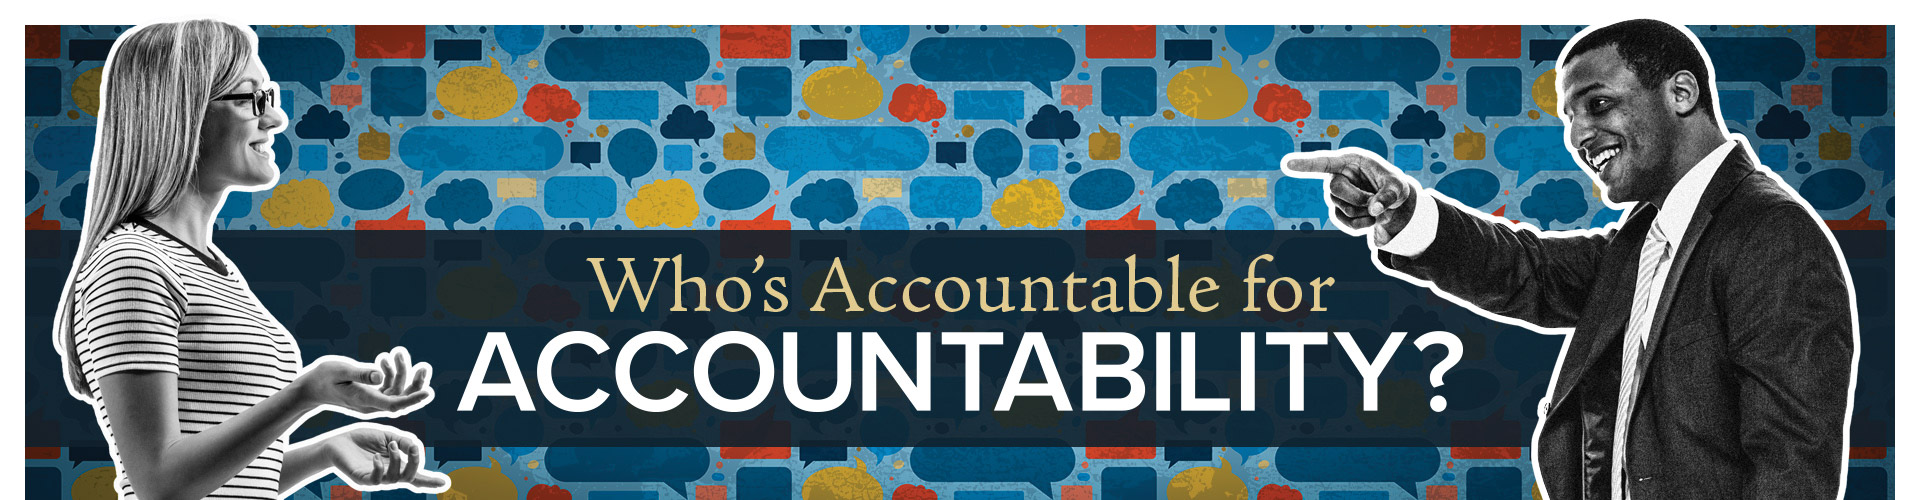 accountability-hero